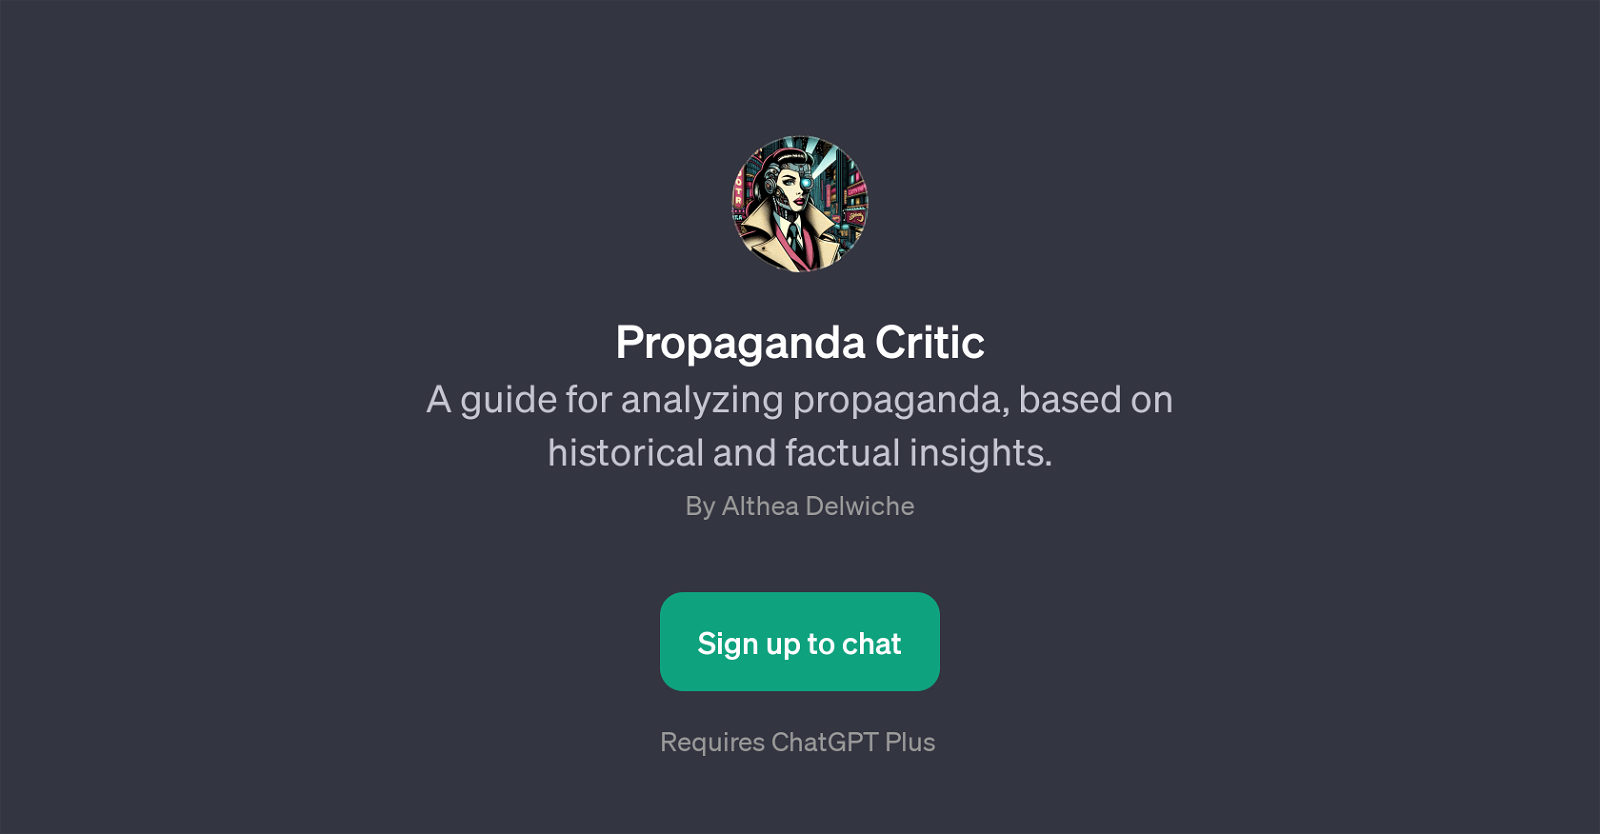 Propaganda Critic website